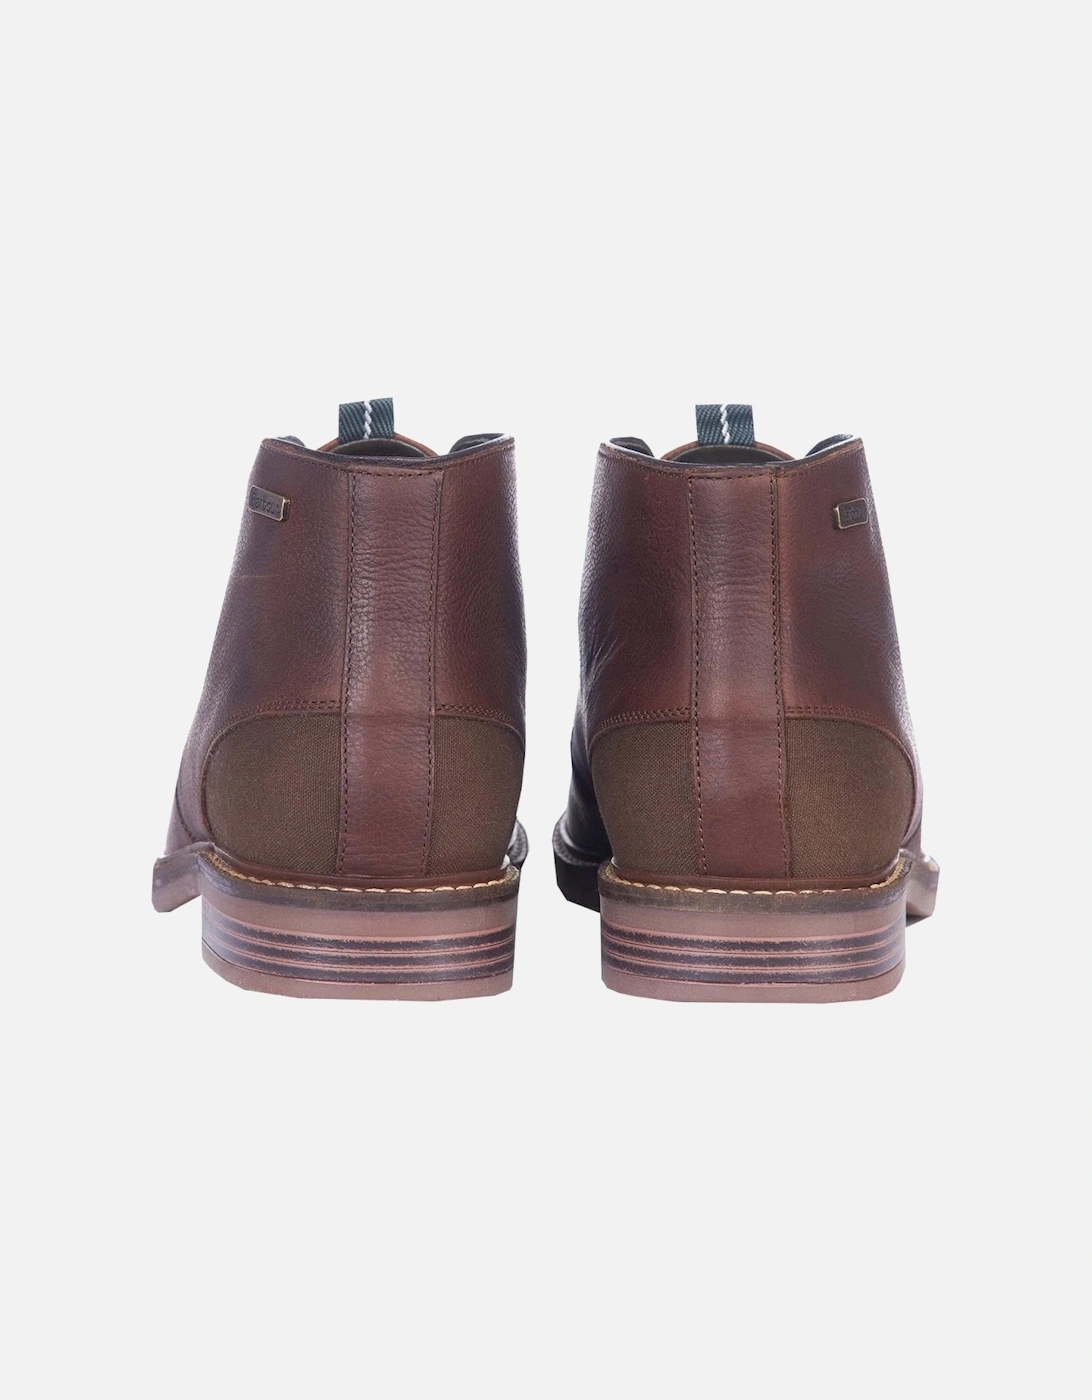 Barbour Men's Teak Readhead Leather Chukka Boot